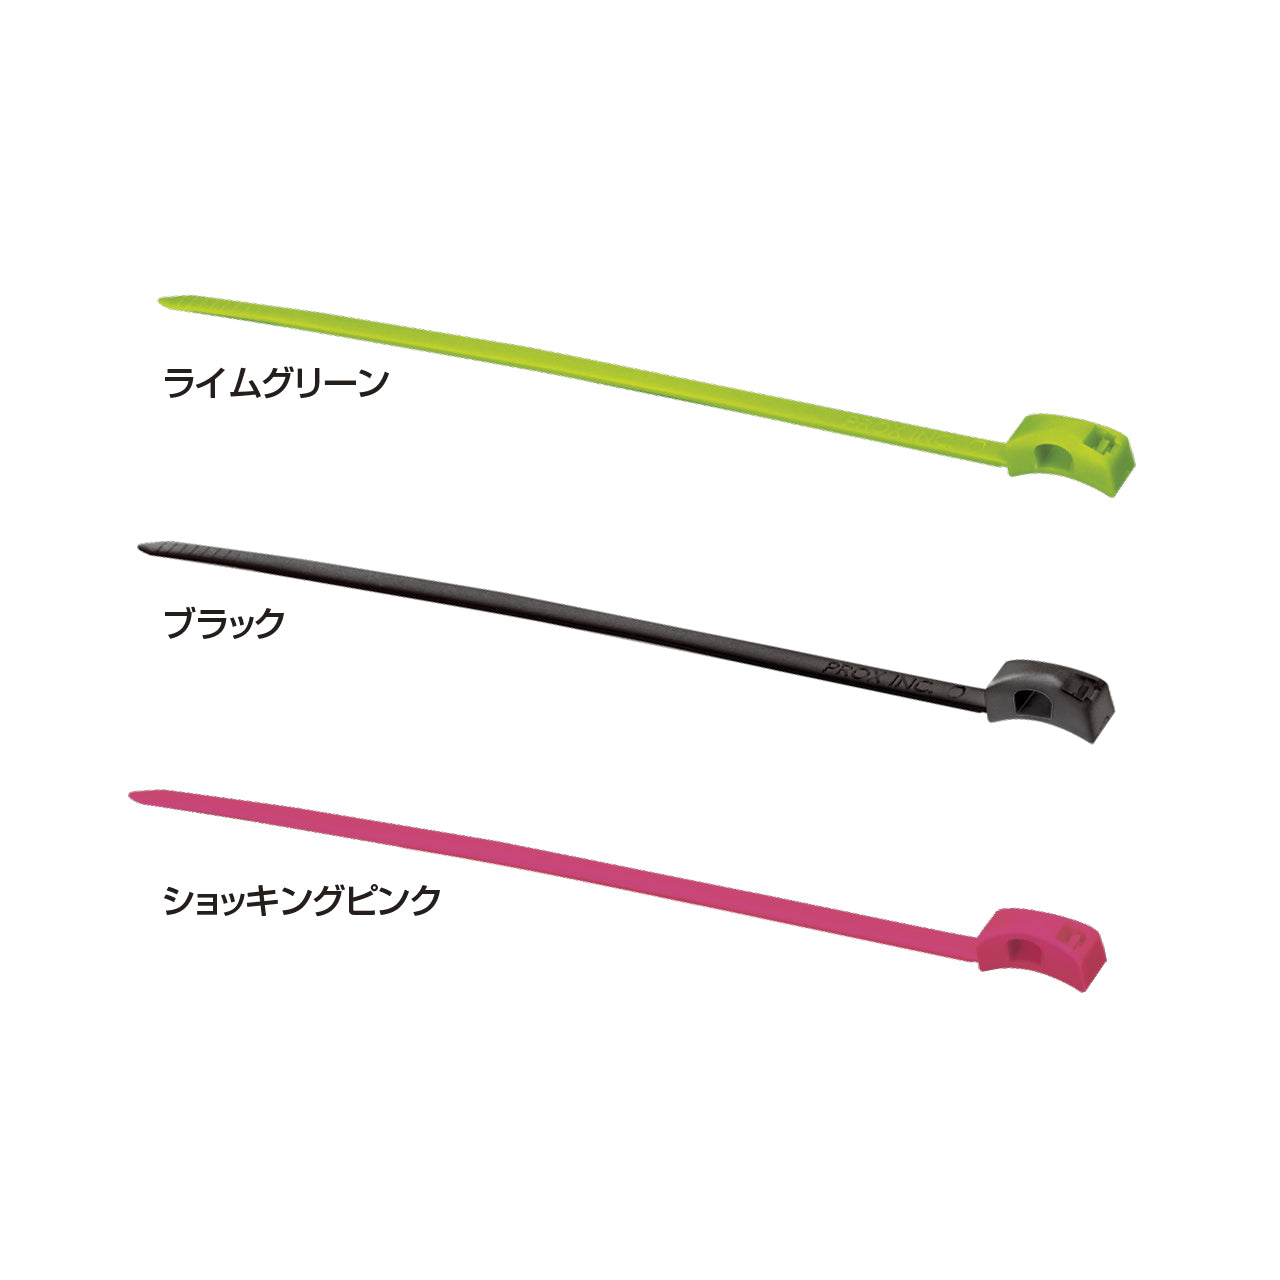 ■ (Shipping fee: 370 yen) Binding hook keeper 10 pieces